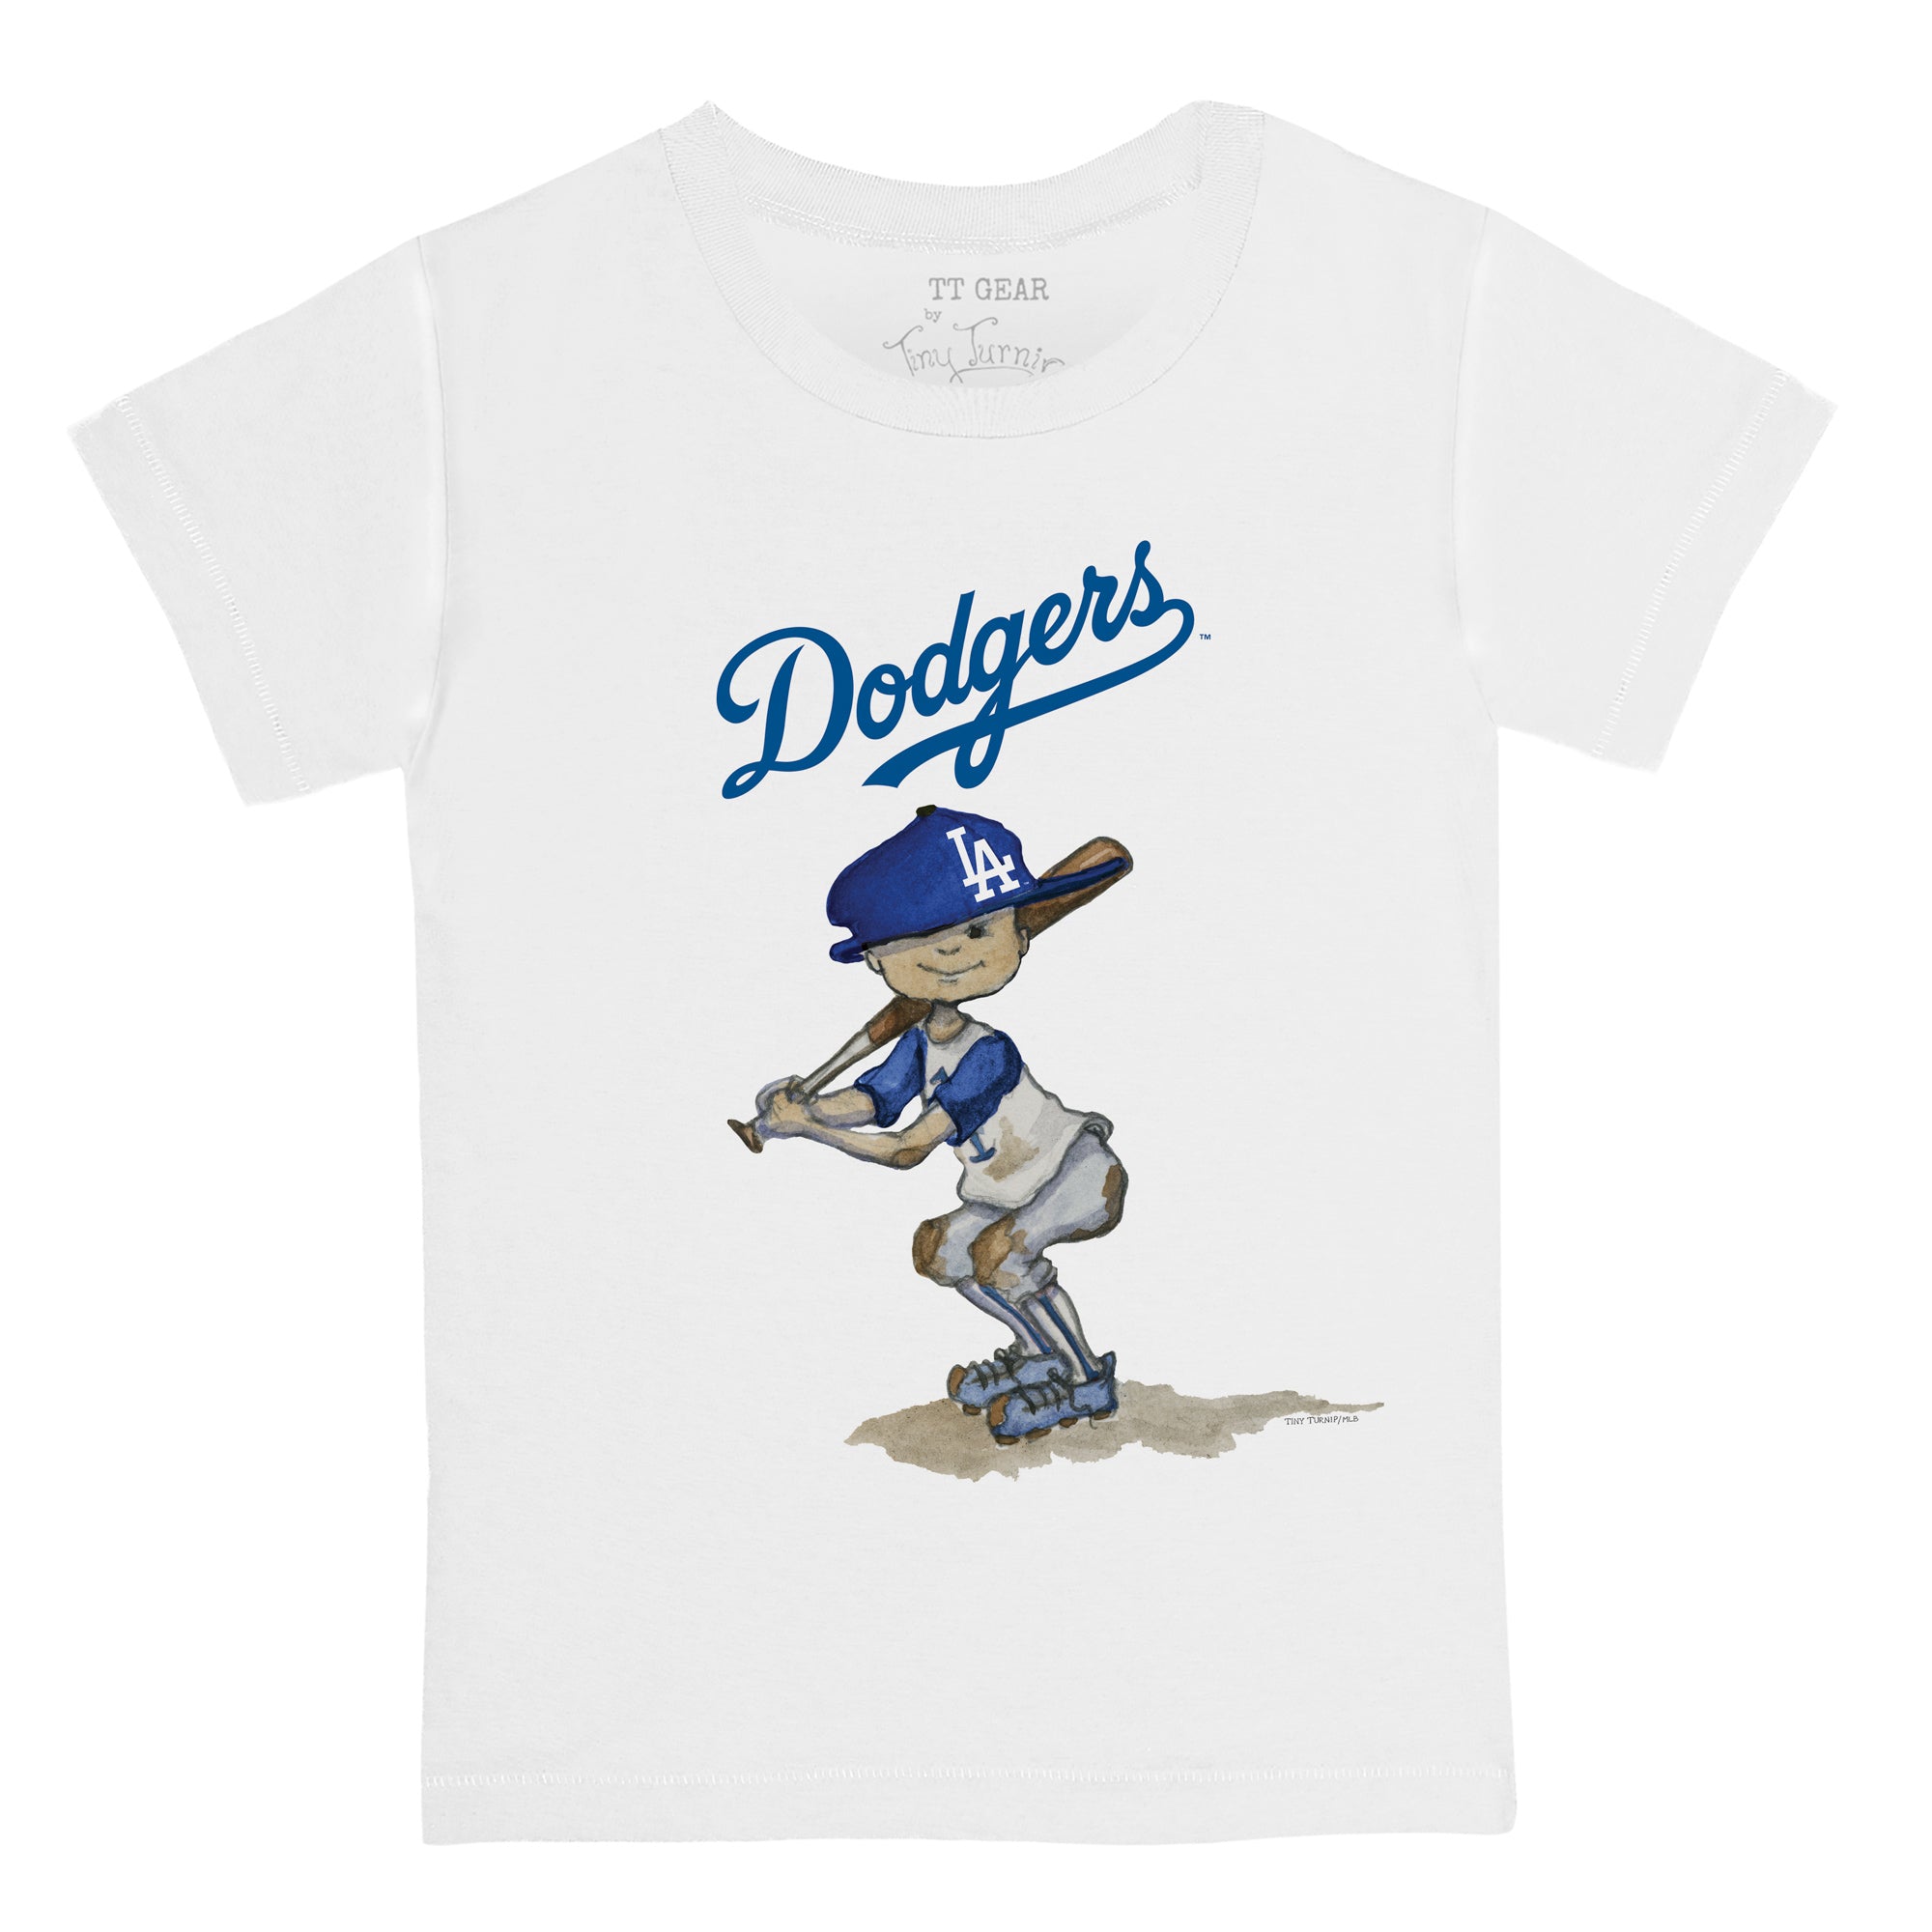 Los Angeles Dodgers Baby Apparel, Dodgers Infant Jerseys, Toddler